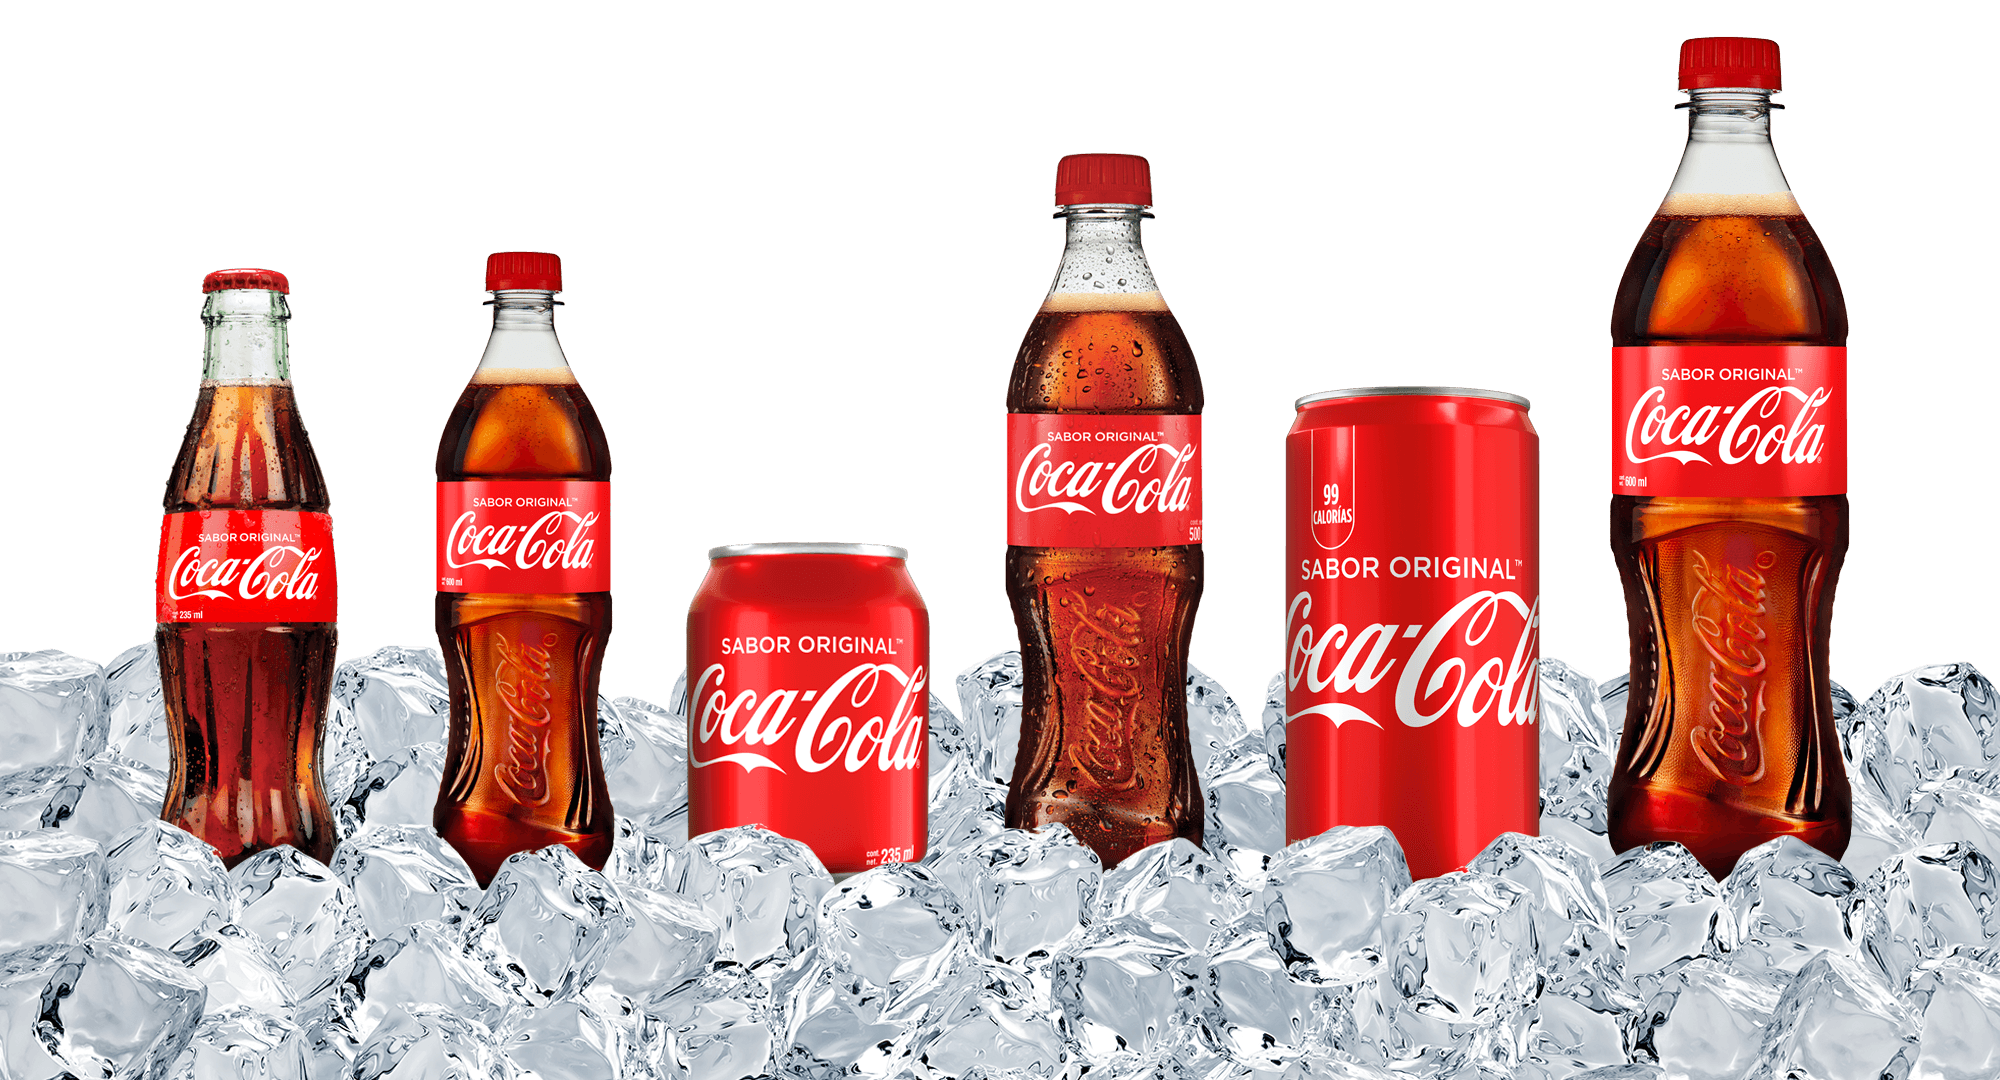 Coca cola promo winners list - wide 11